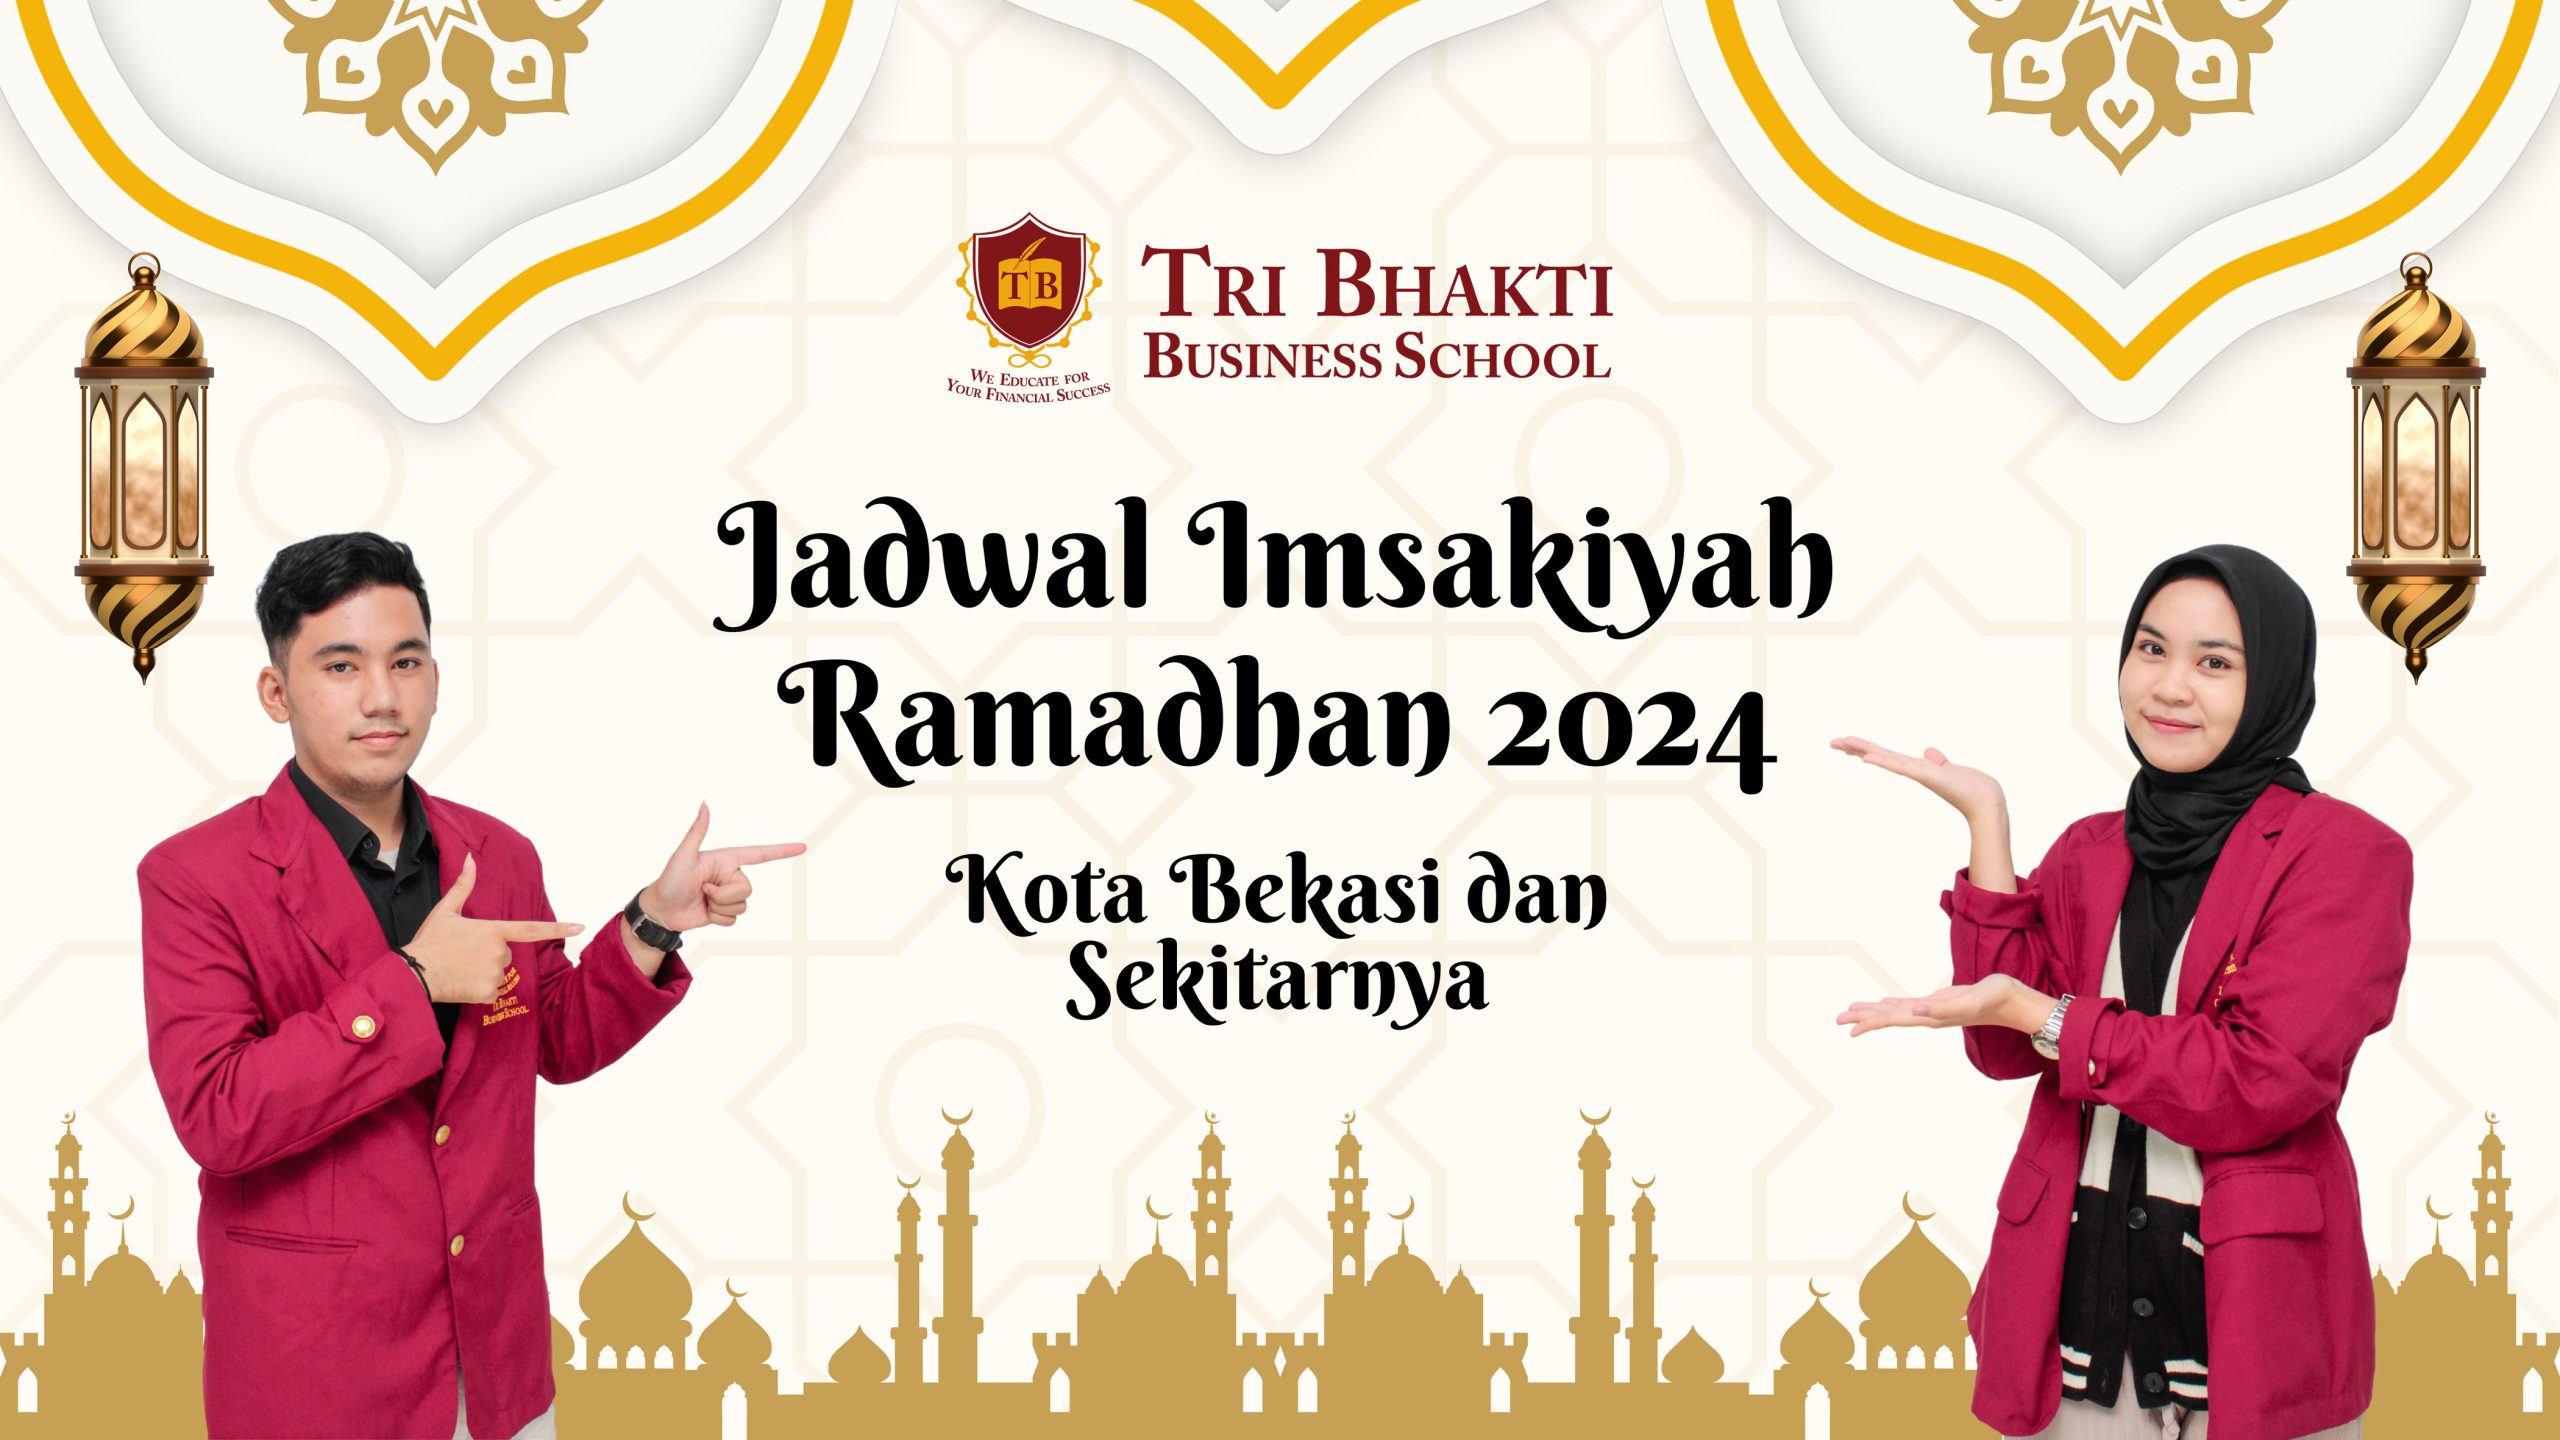 Jadwal Imsakiyah Ramadhan 2024 Kota Bekasi dan sekitarnya, di atasnya terdapat logo Tri Bhakti Business School dan sisamping kanan kirinnya terdapat mahasiswa dan mahasiswi tri bhakti business school